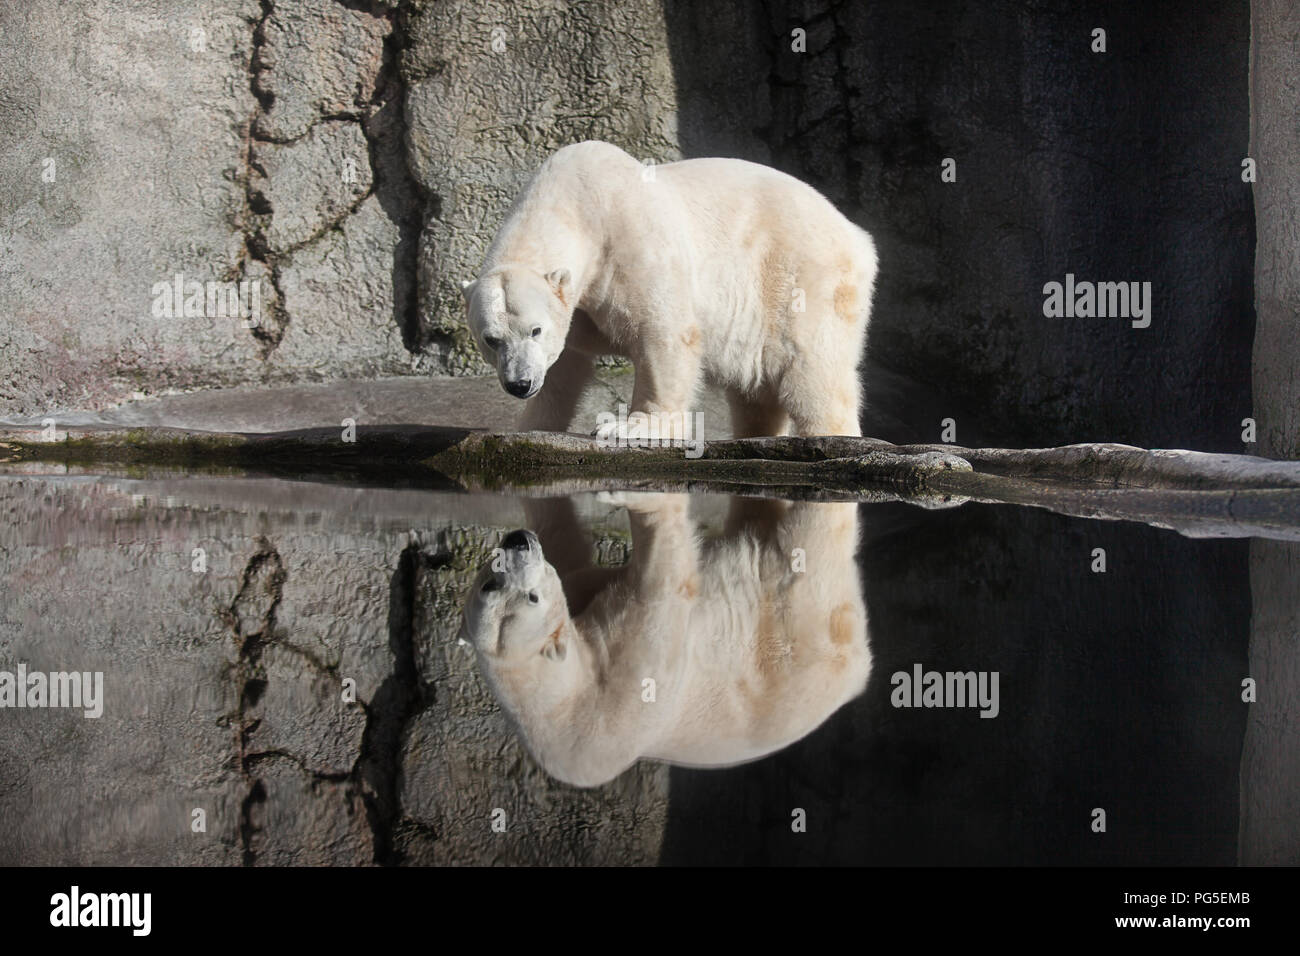 Polar bear and reflection in Portland Zoo Stock Photo